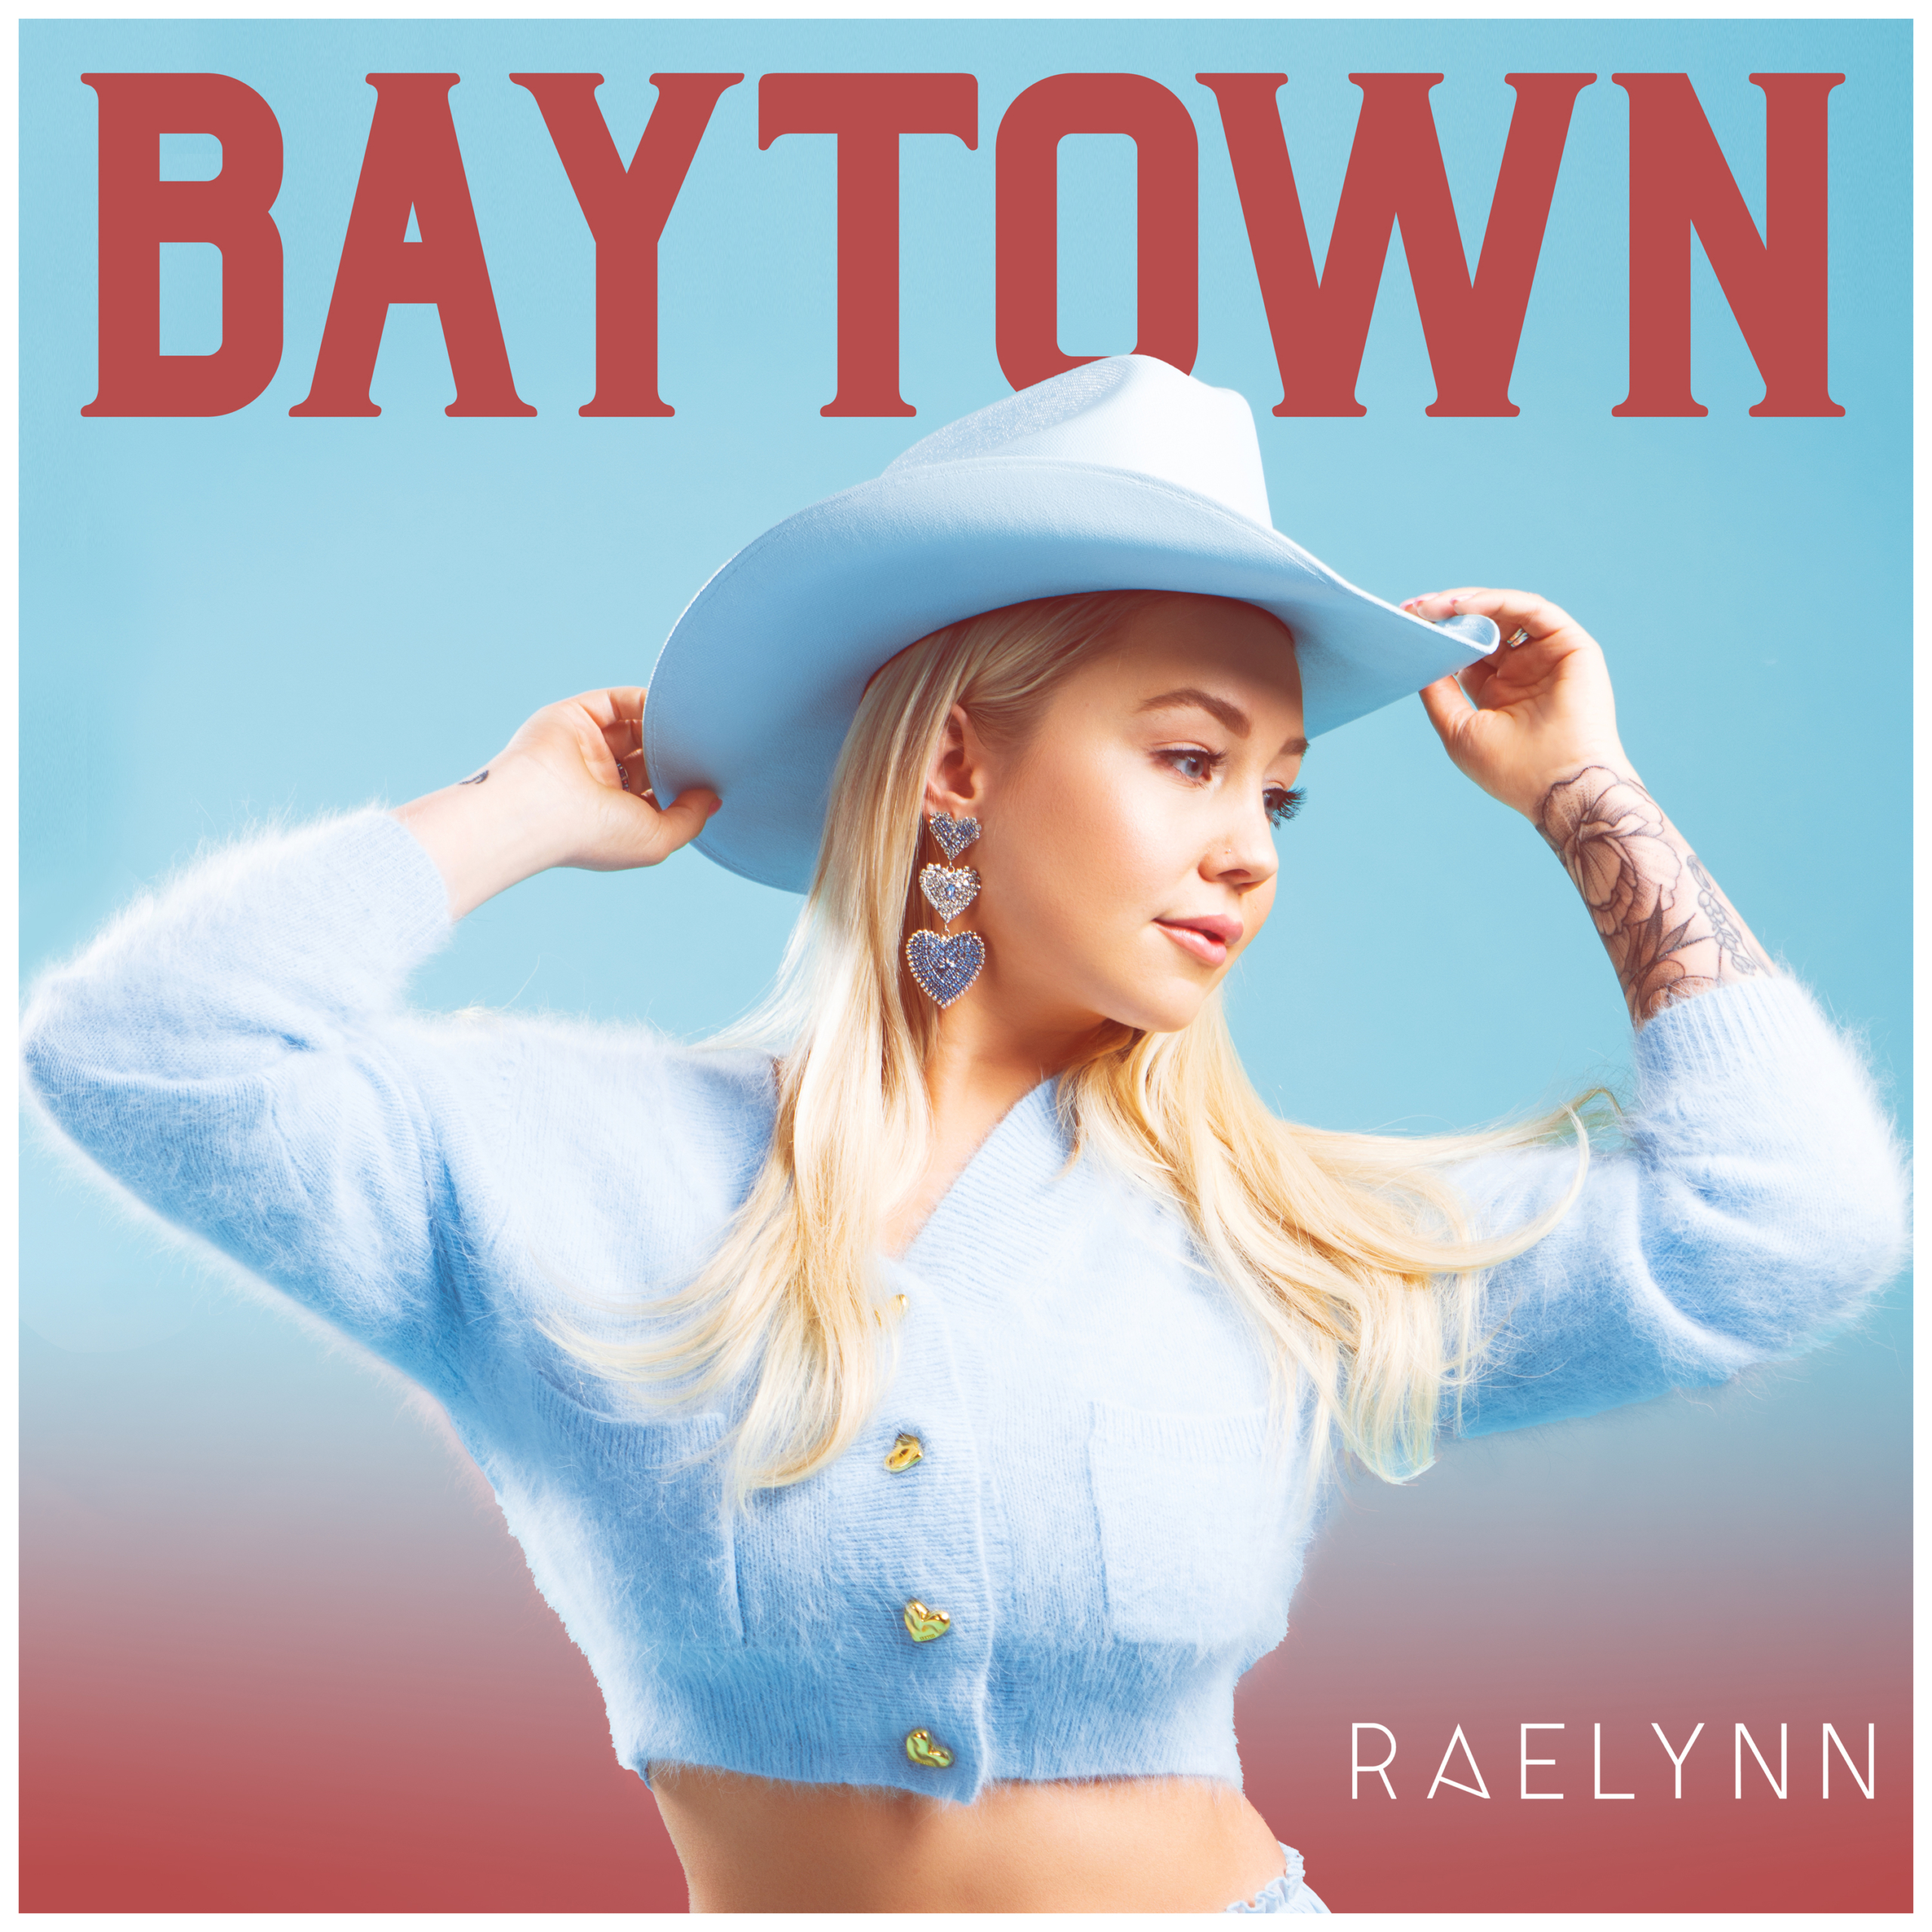 Baytown RaeLynn